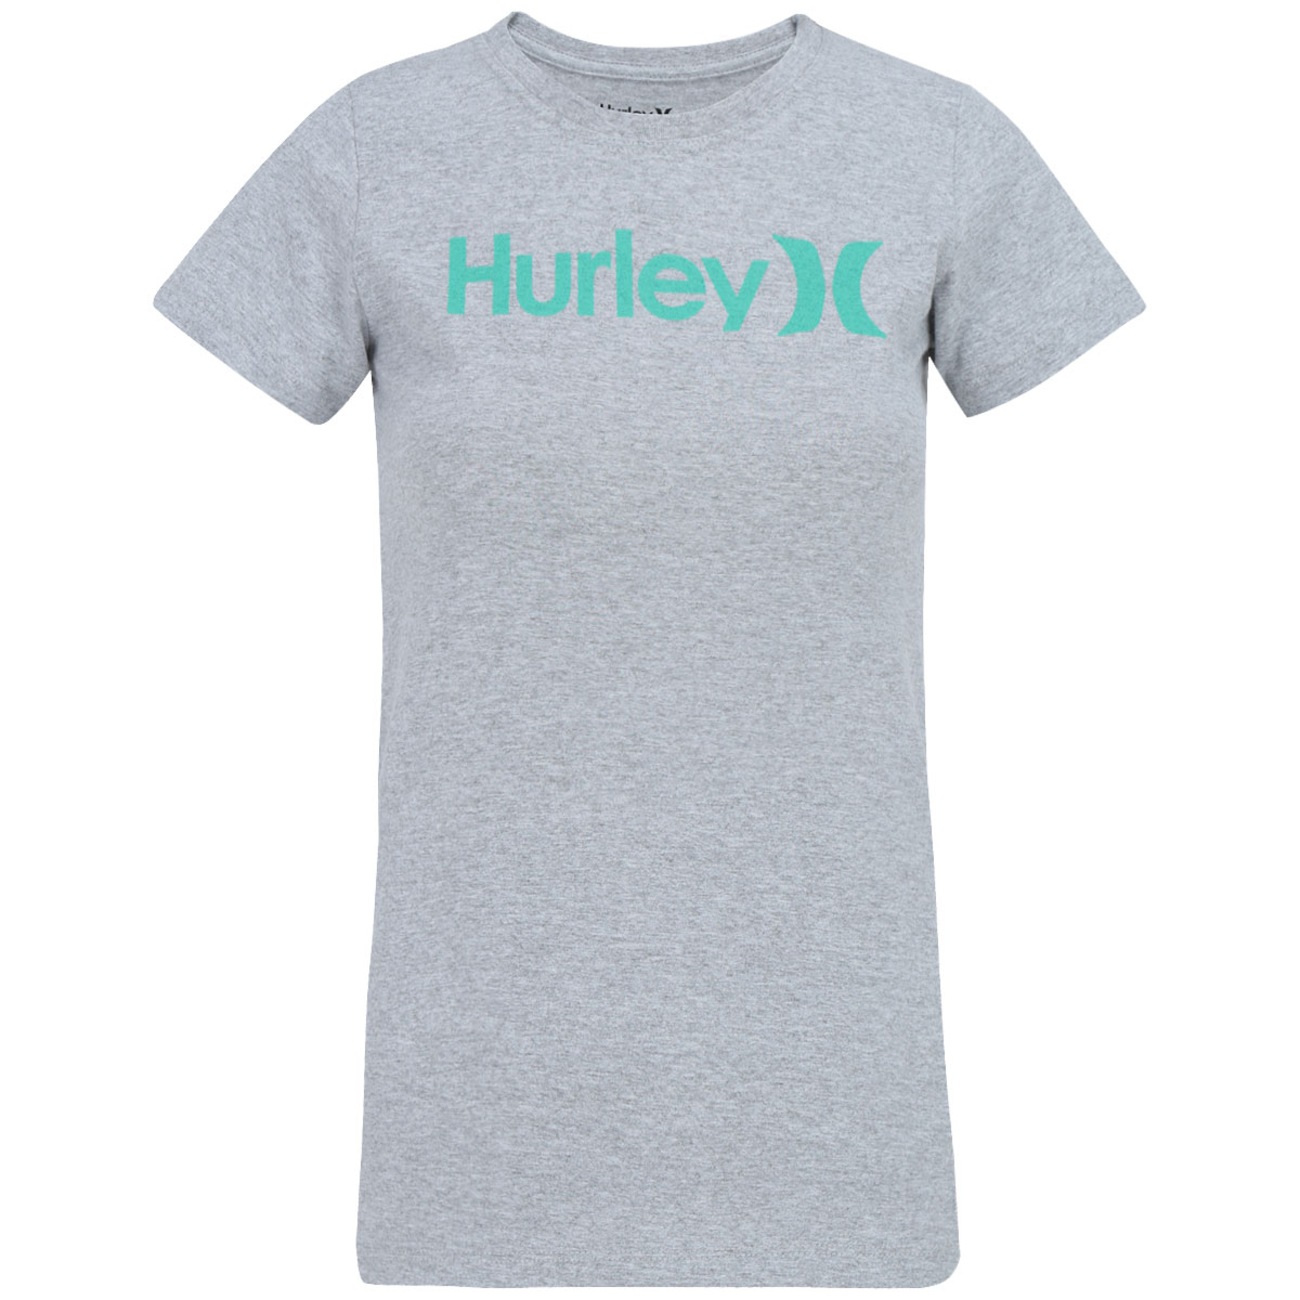 camisa da hurley feminina